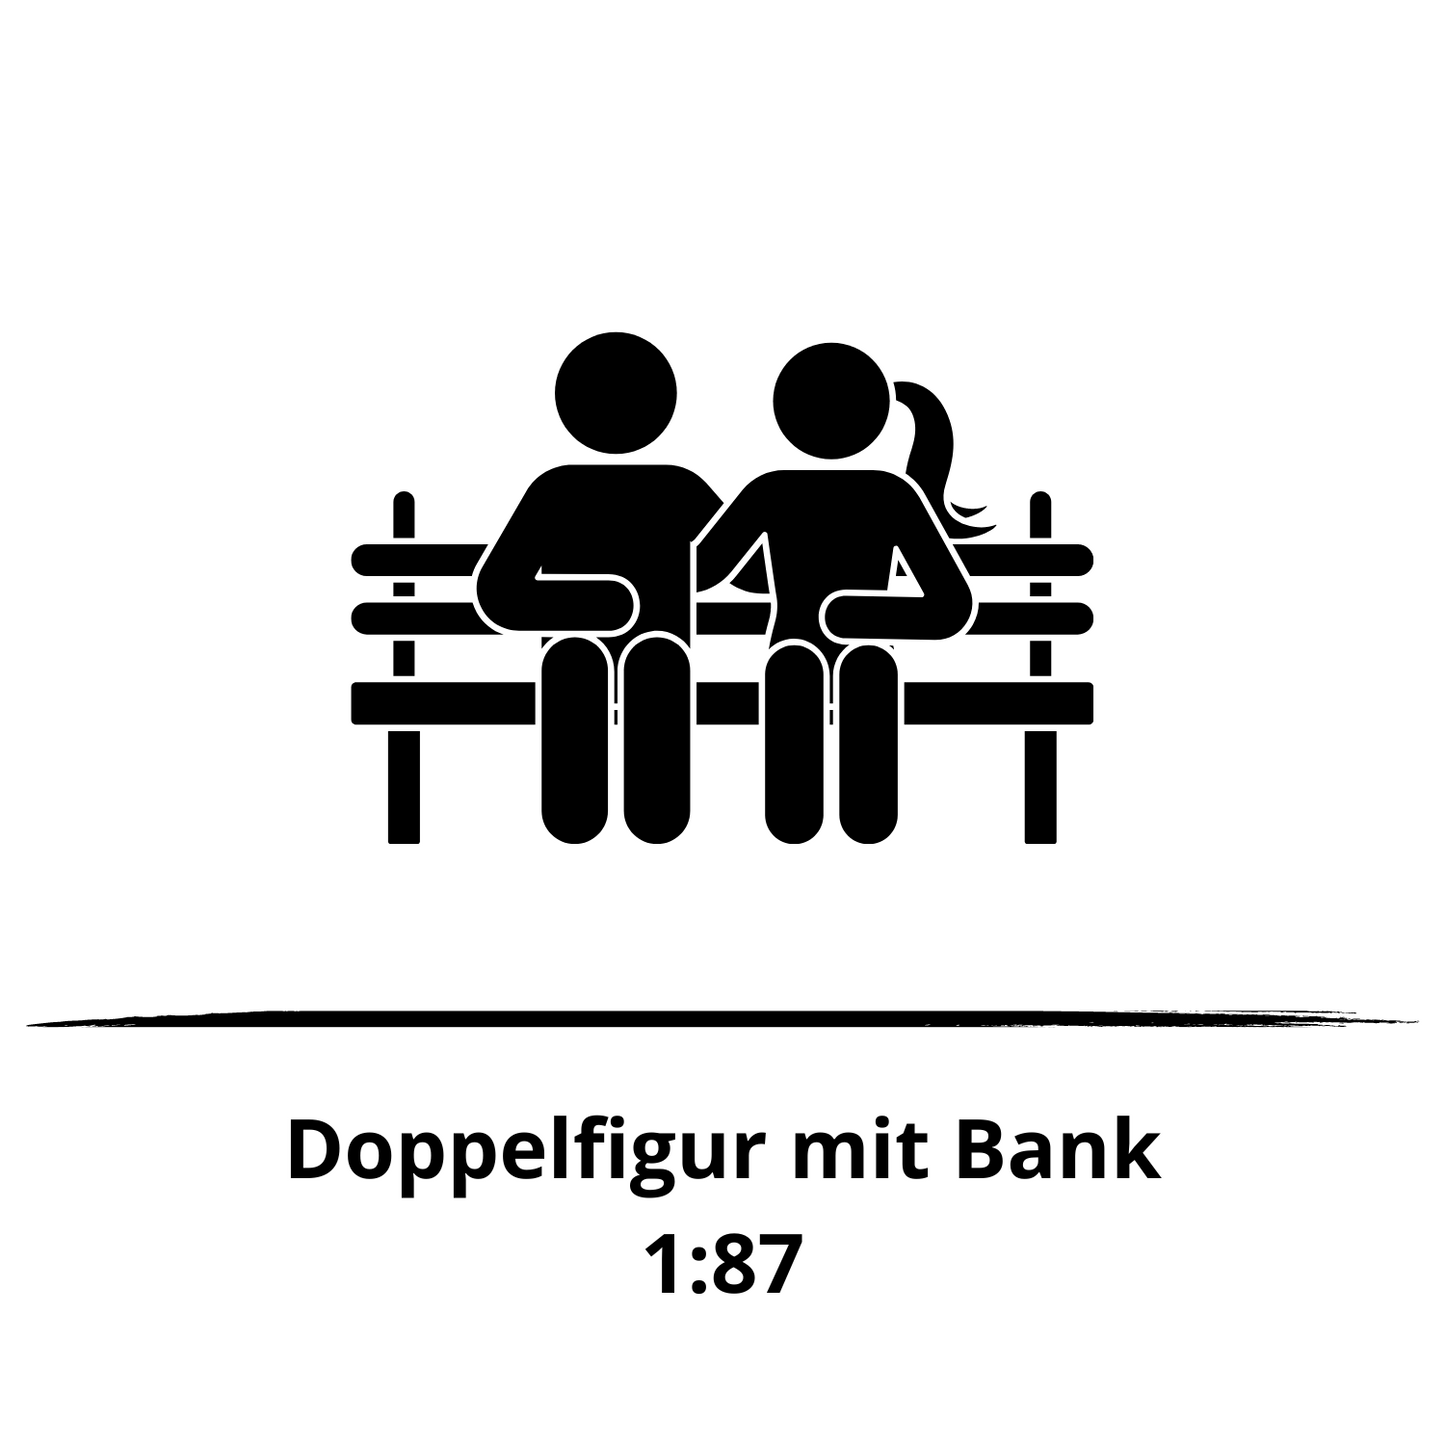 1:87 Doppelfigur mit Bank